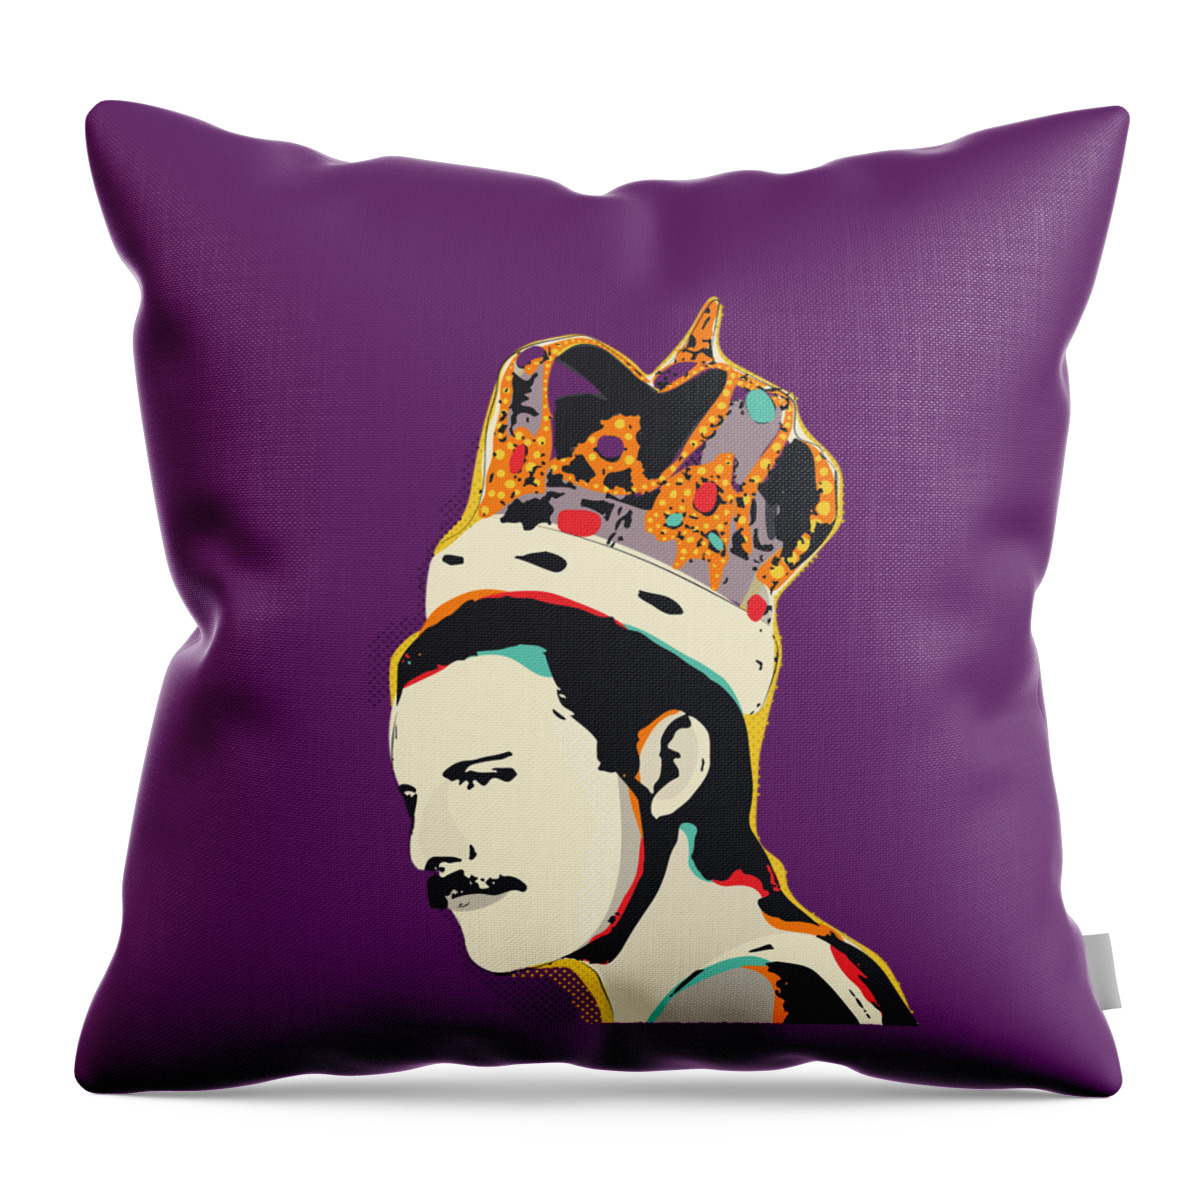 Freddie Mercury Throw Pillow featuring the digital art Freddie Mercury Pop Art Quote by BONB Creative